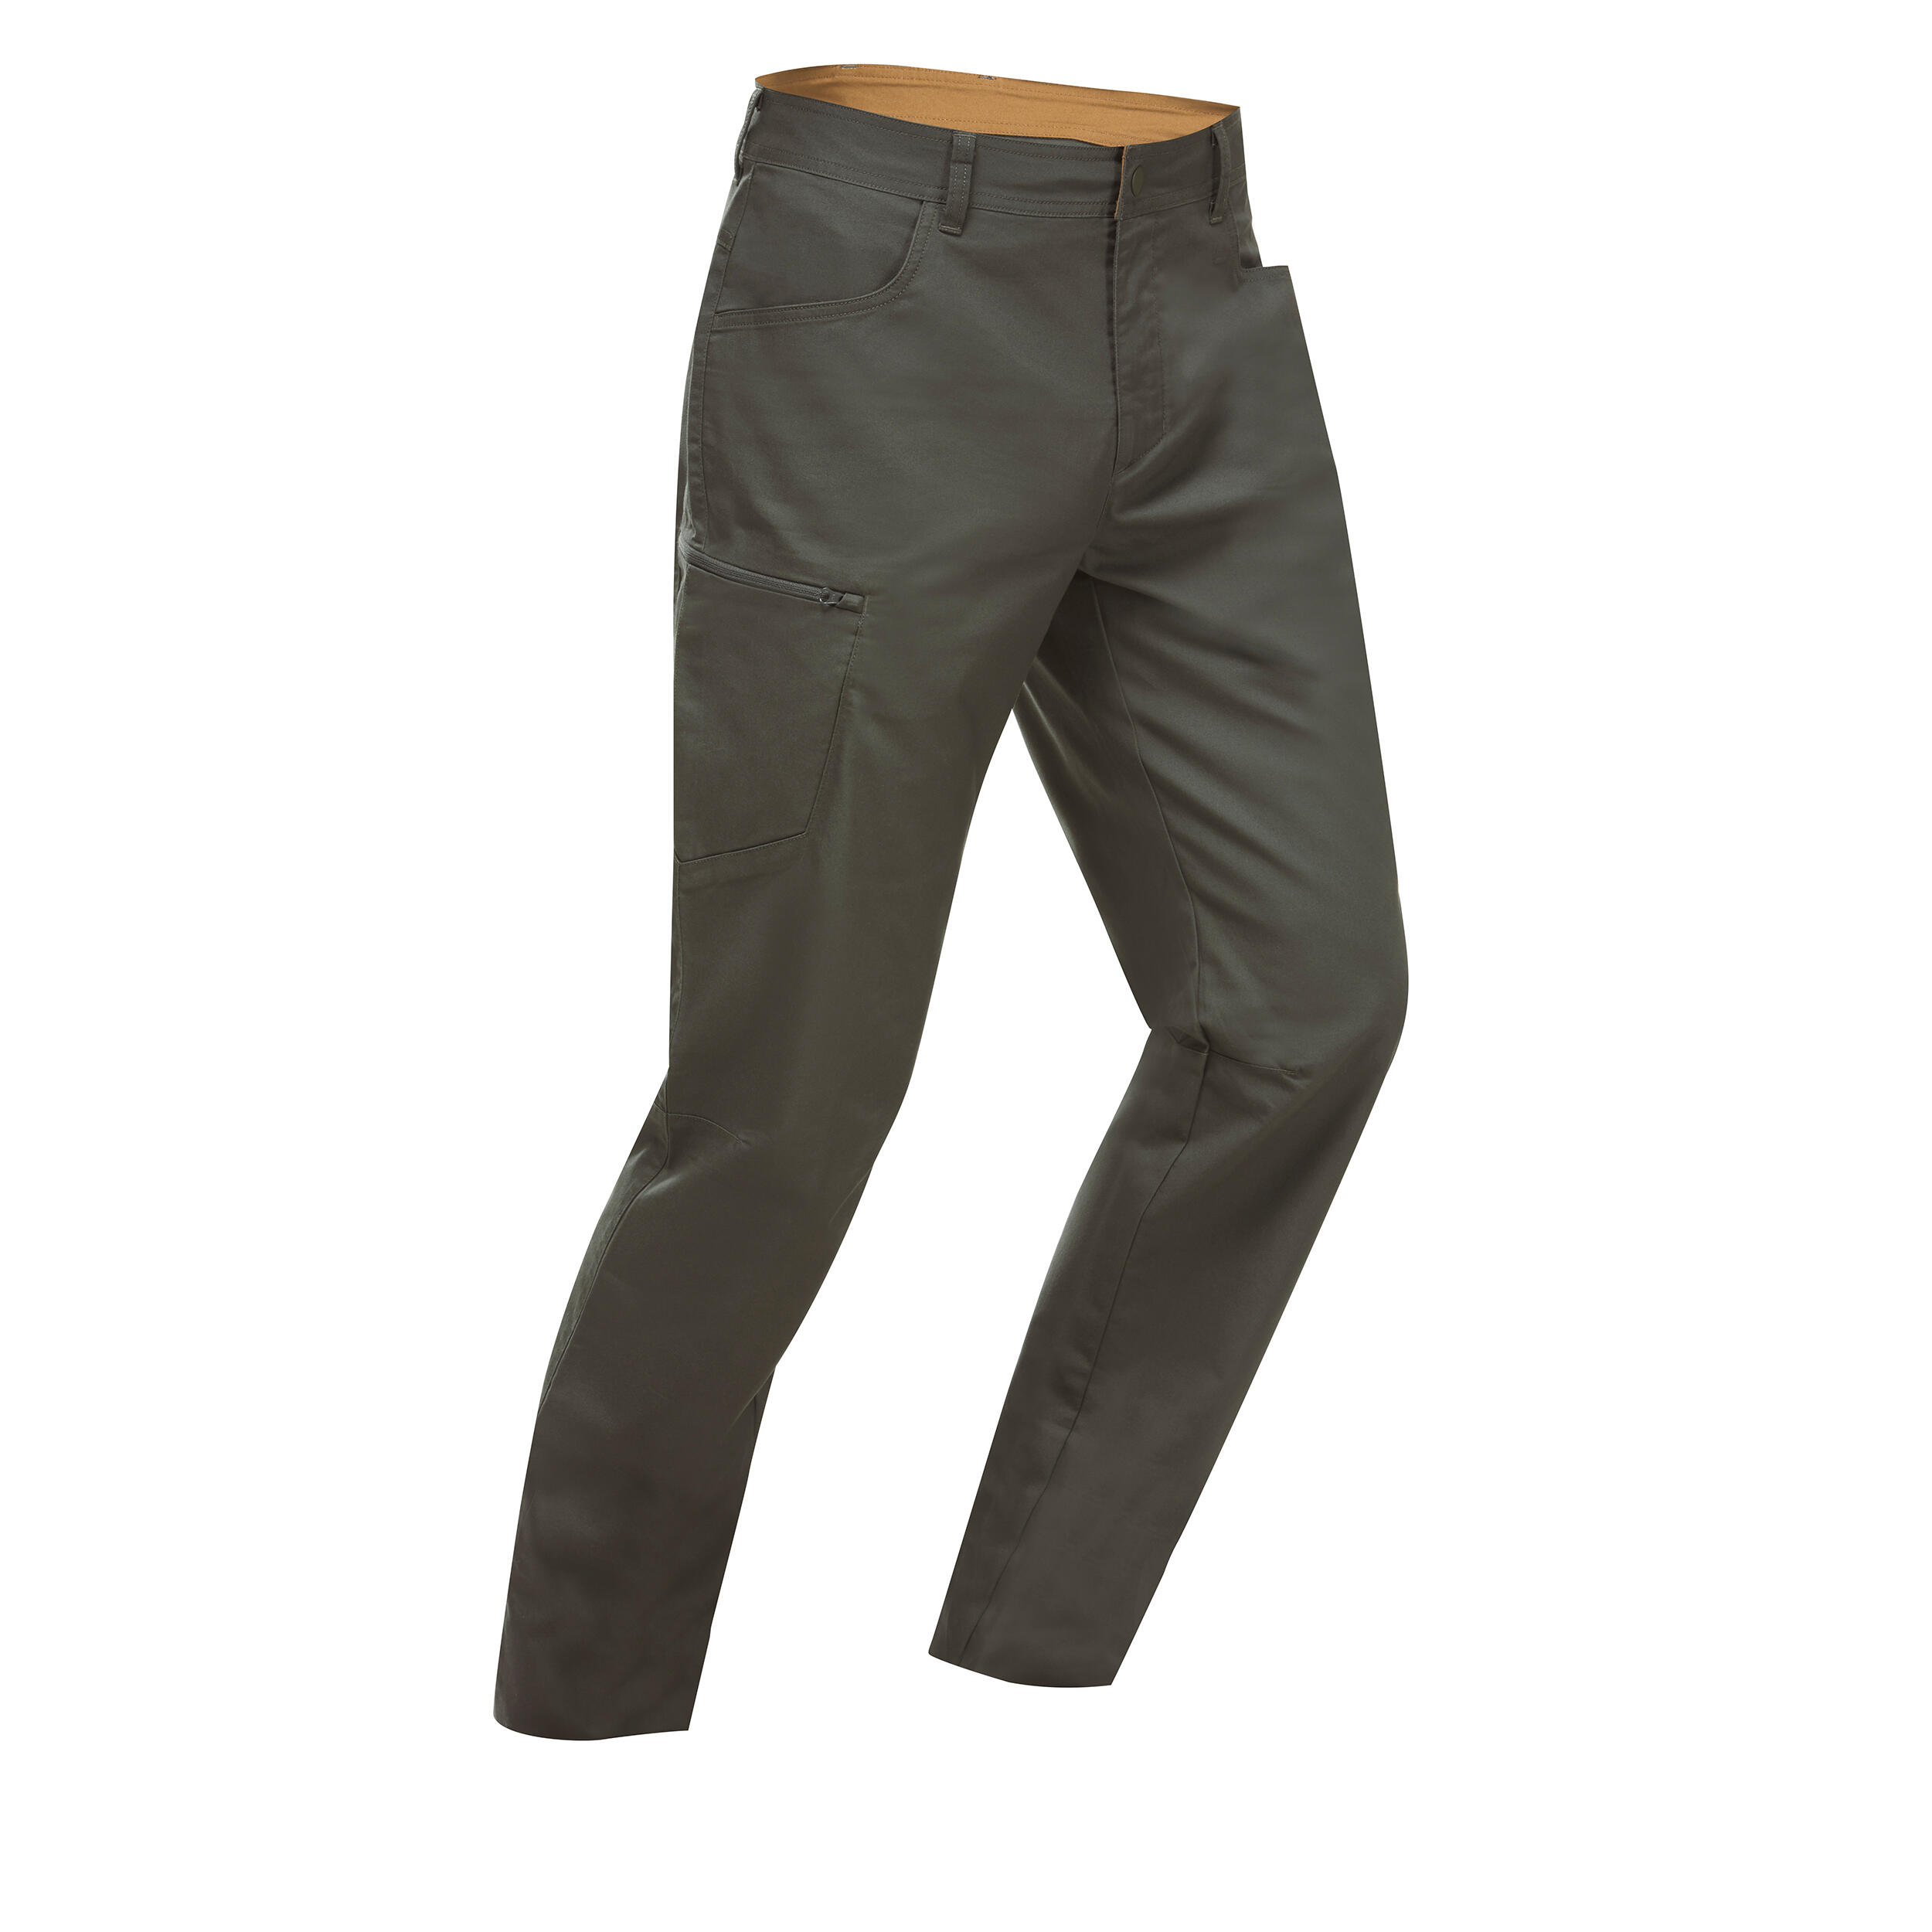 Pantalon Regular Drumeție în natură NH500 Kaki Bărbați La Oferta Online decathlon imagine La Oferta Online